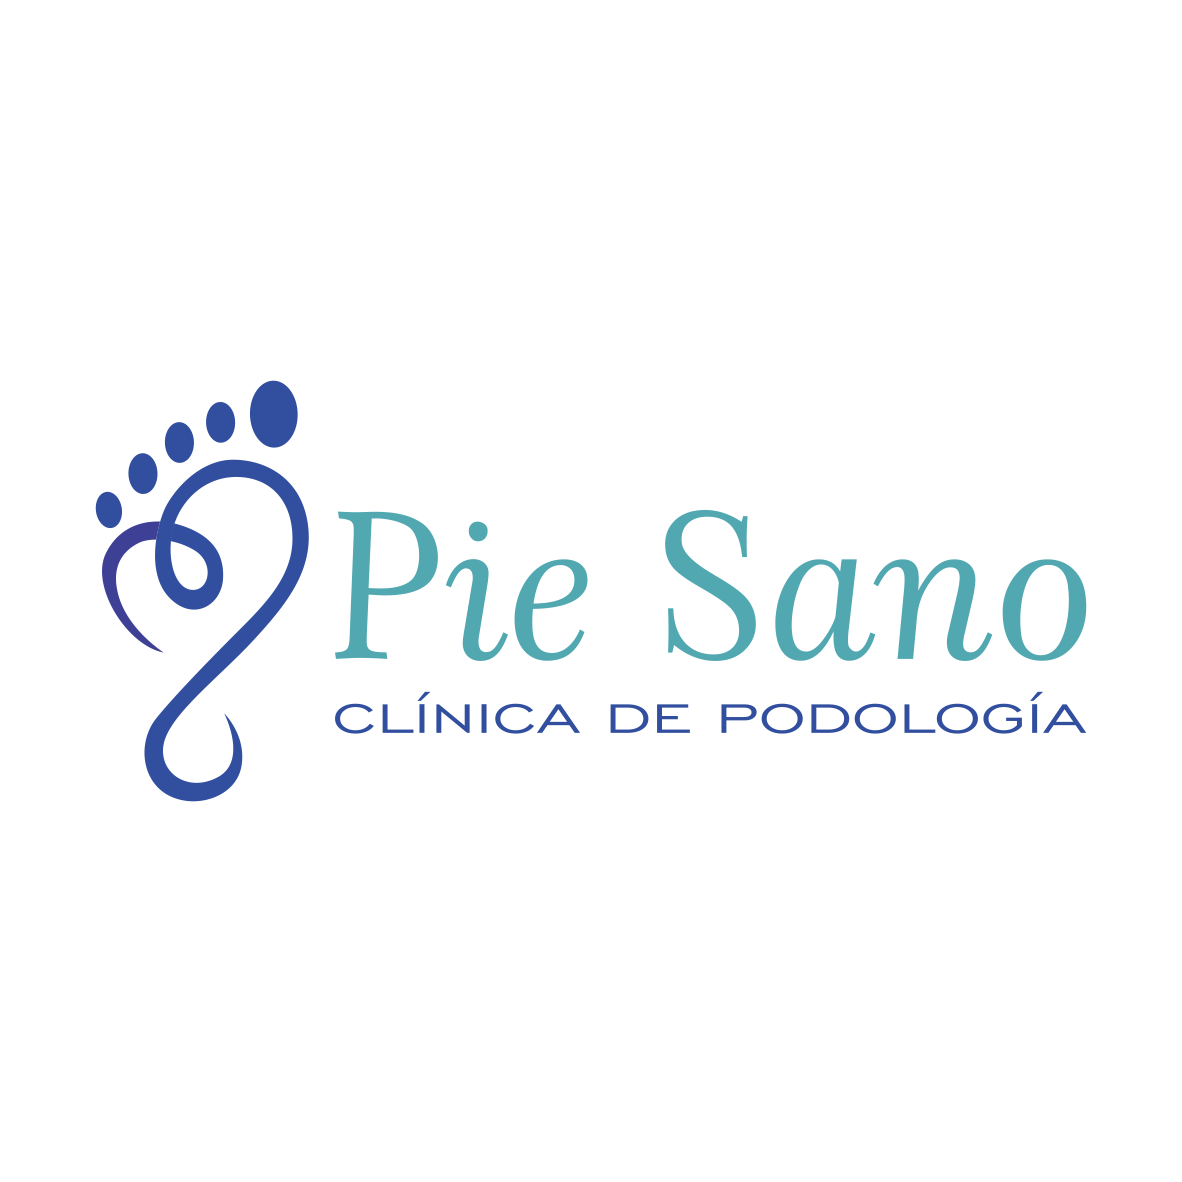 Pie Sano Clinica de Podoligia by Slypc